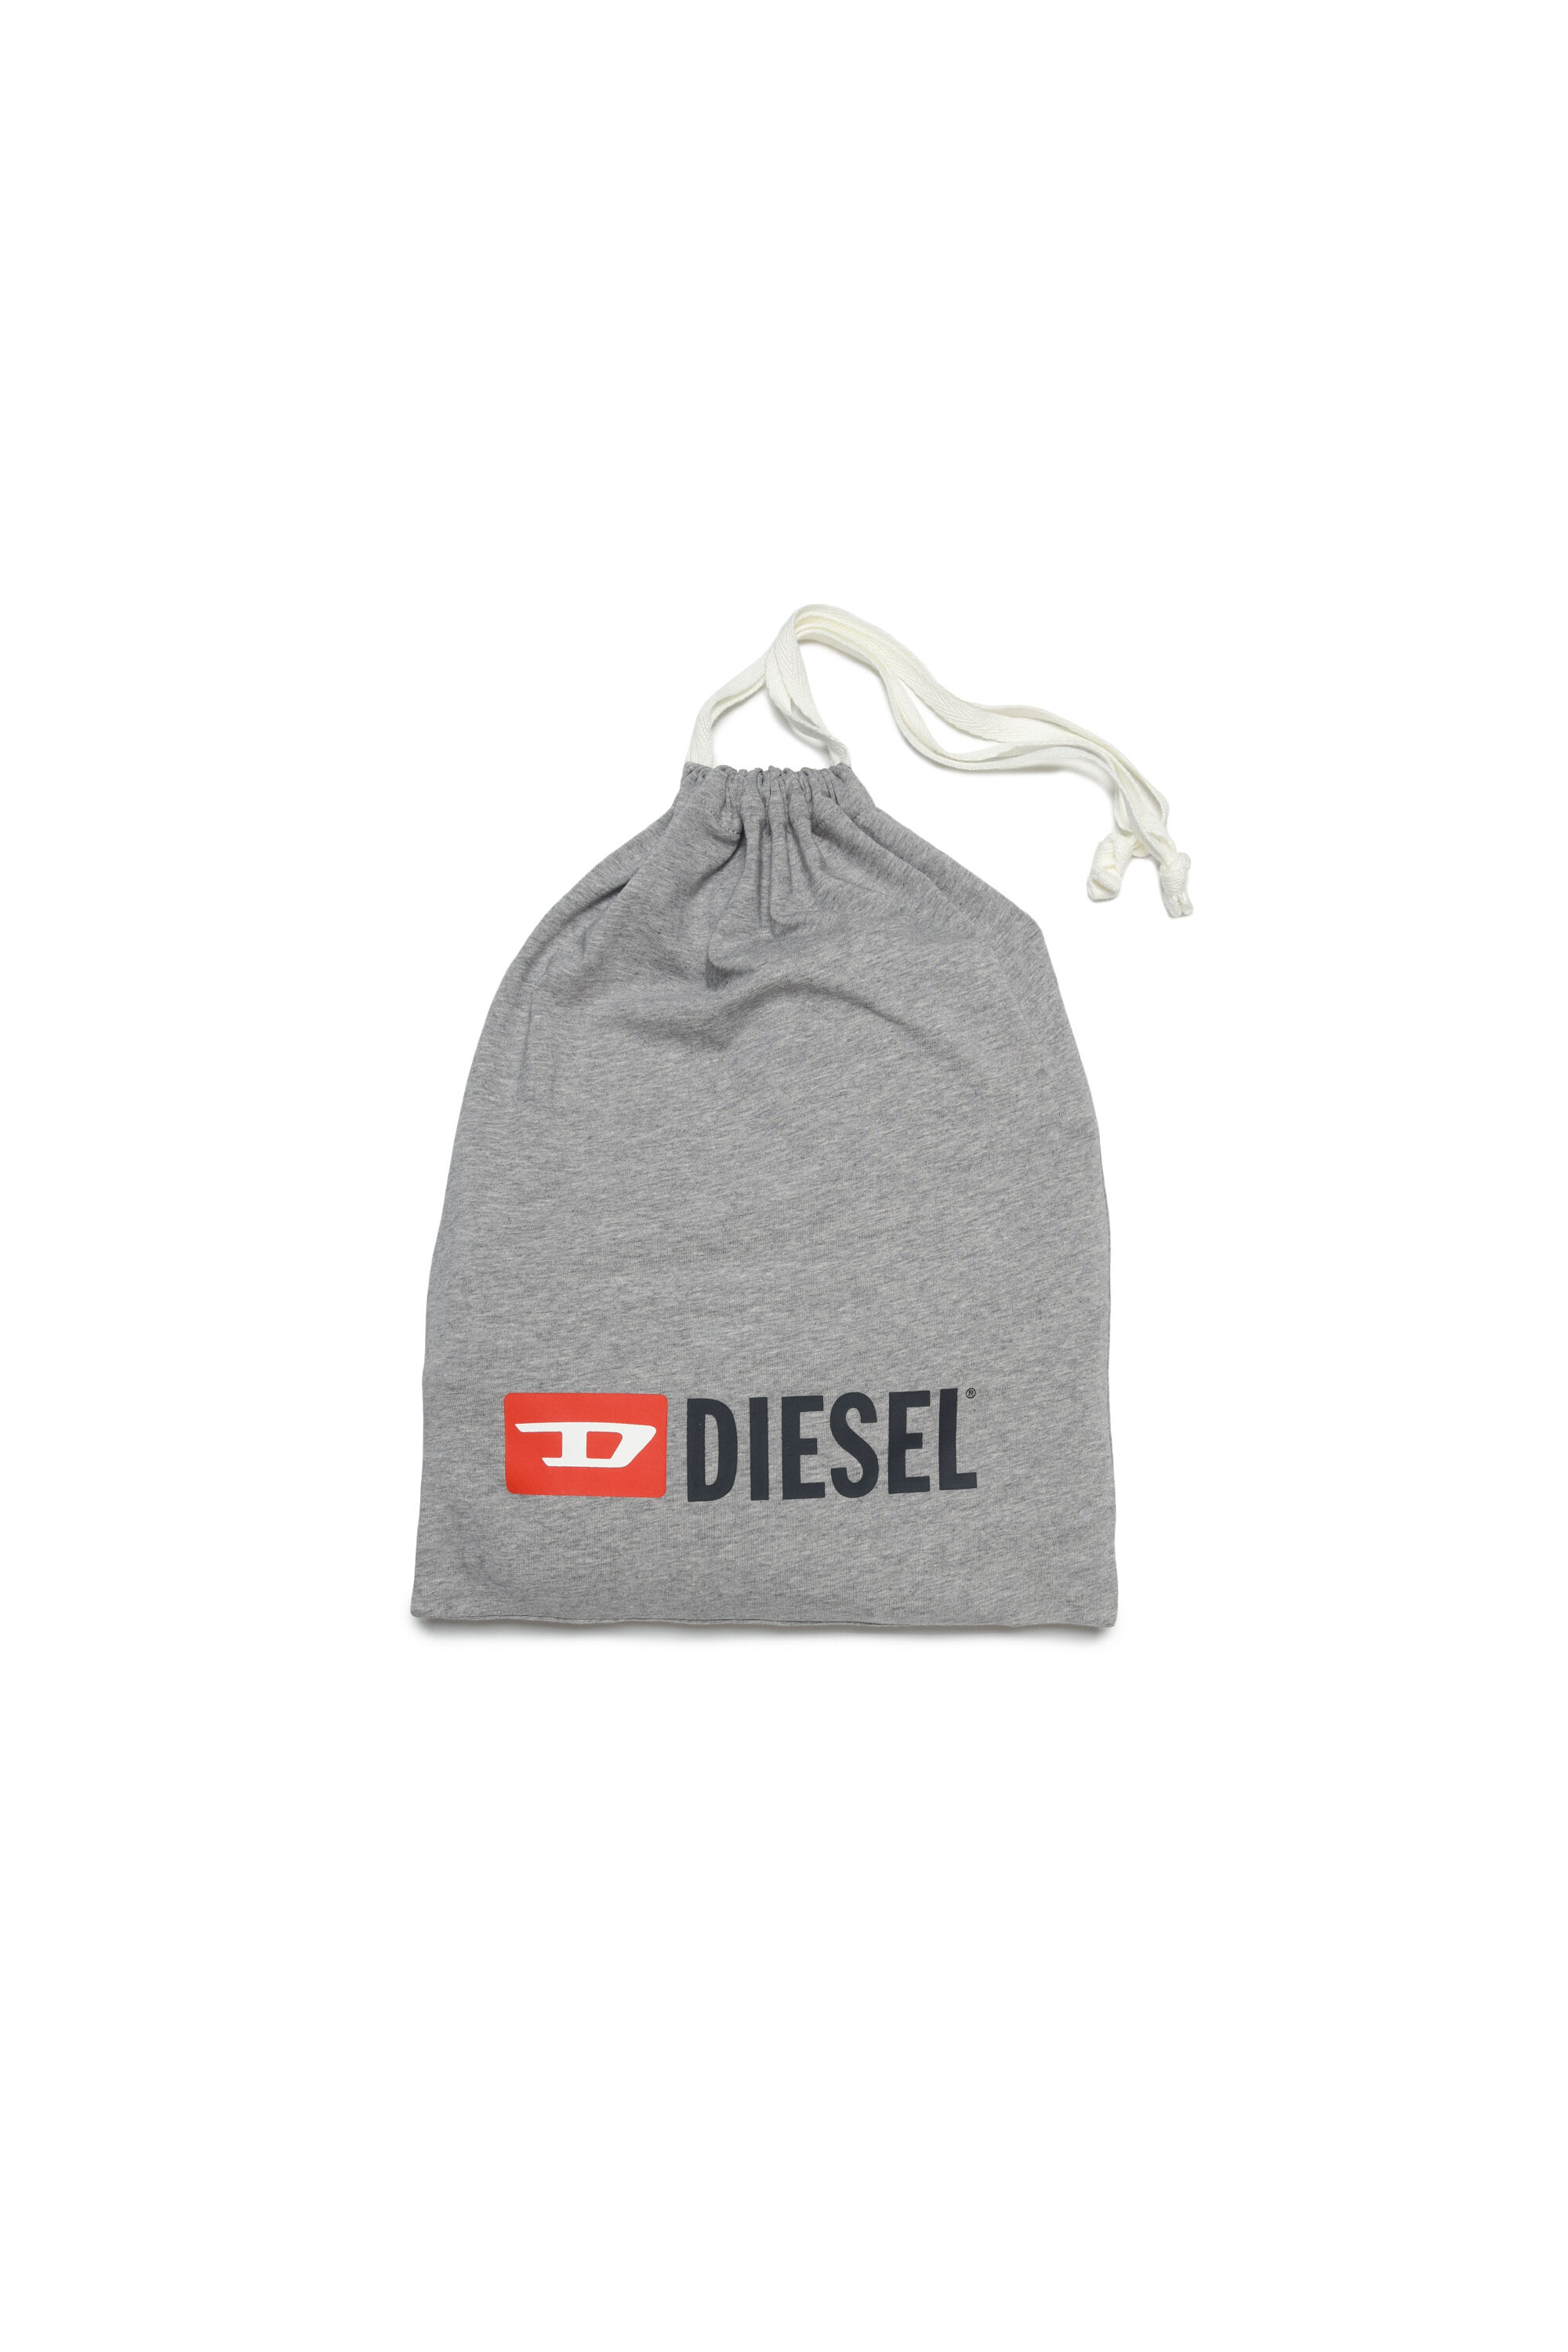 Diesel - UNPELIO, Grey - Image 4